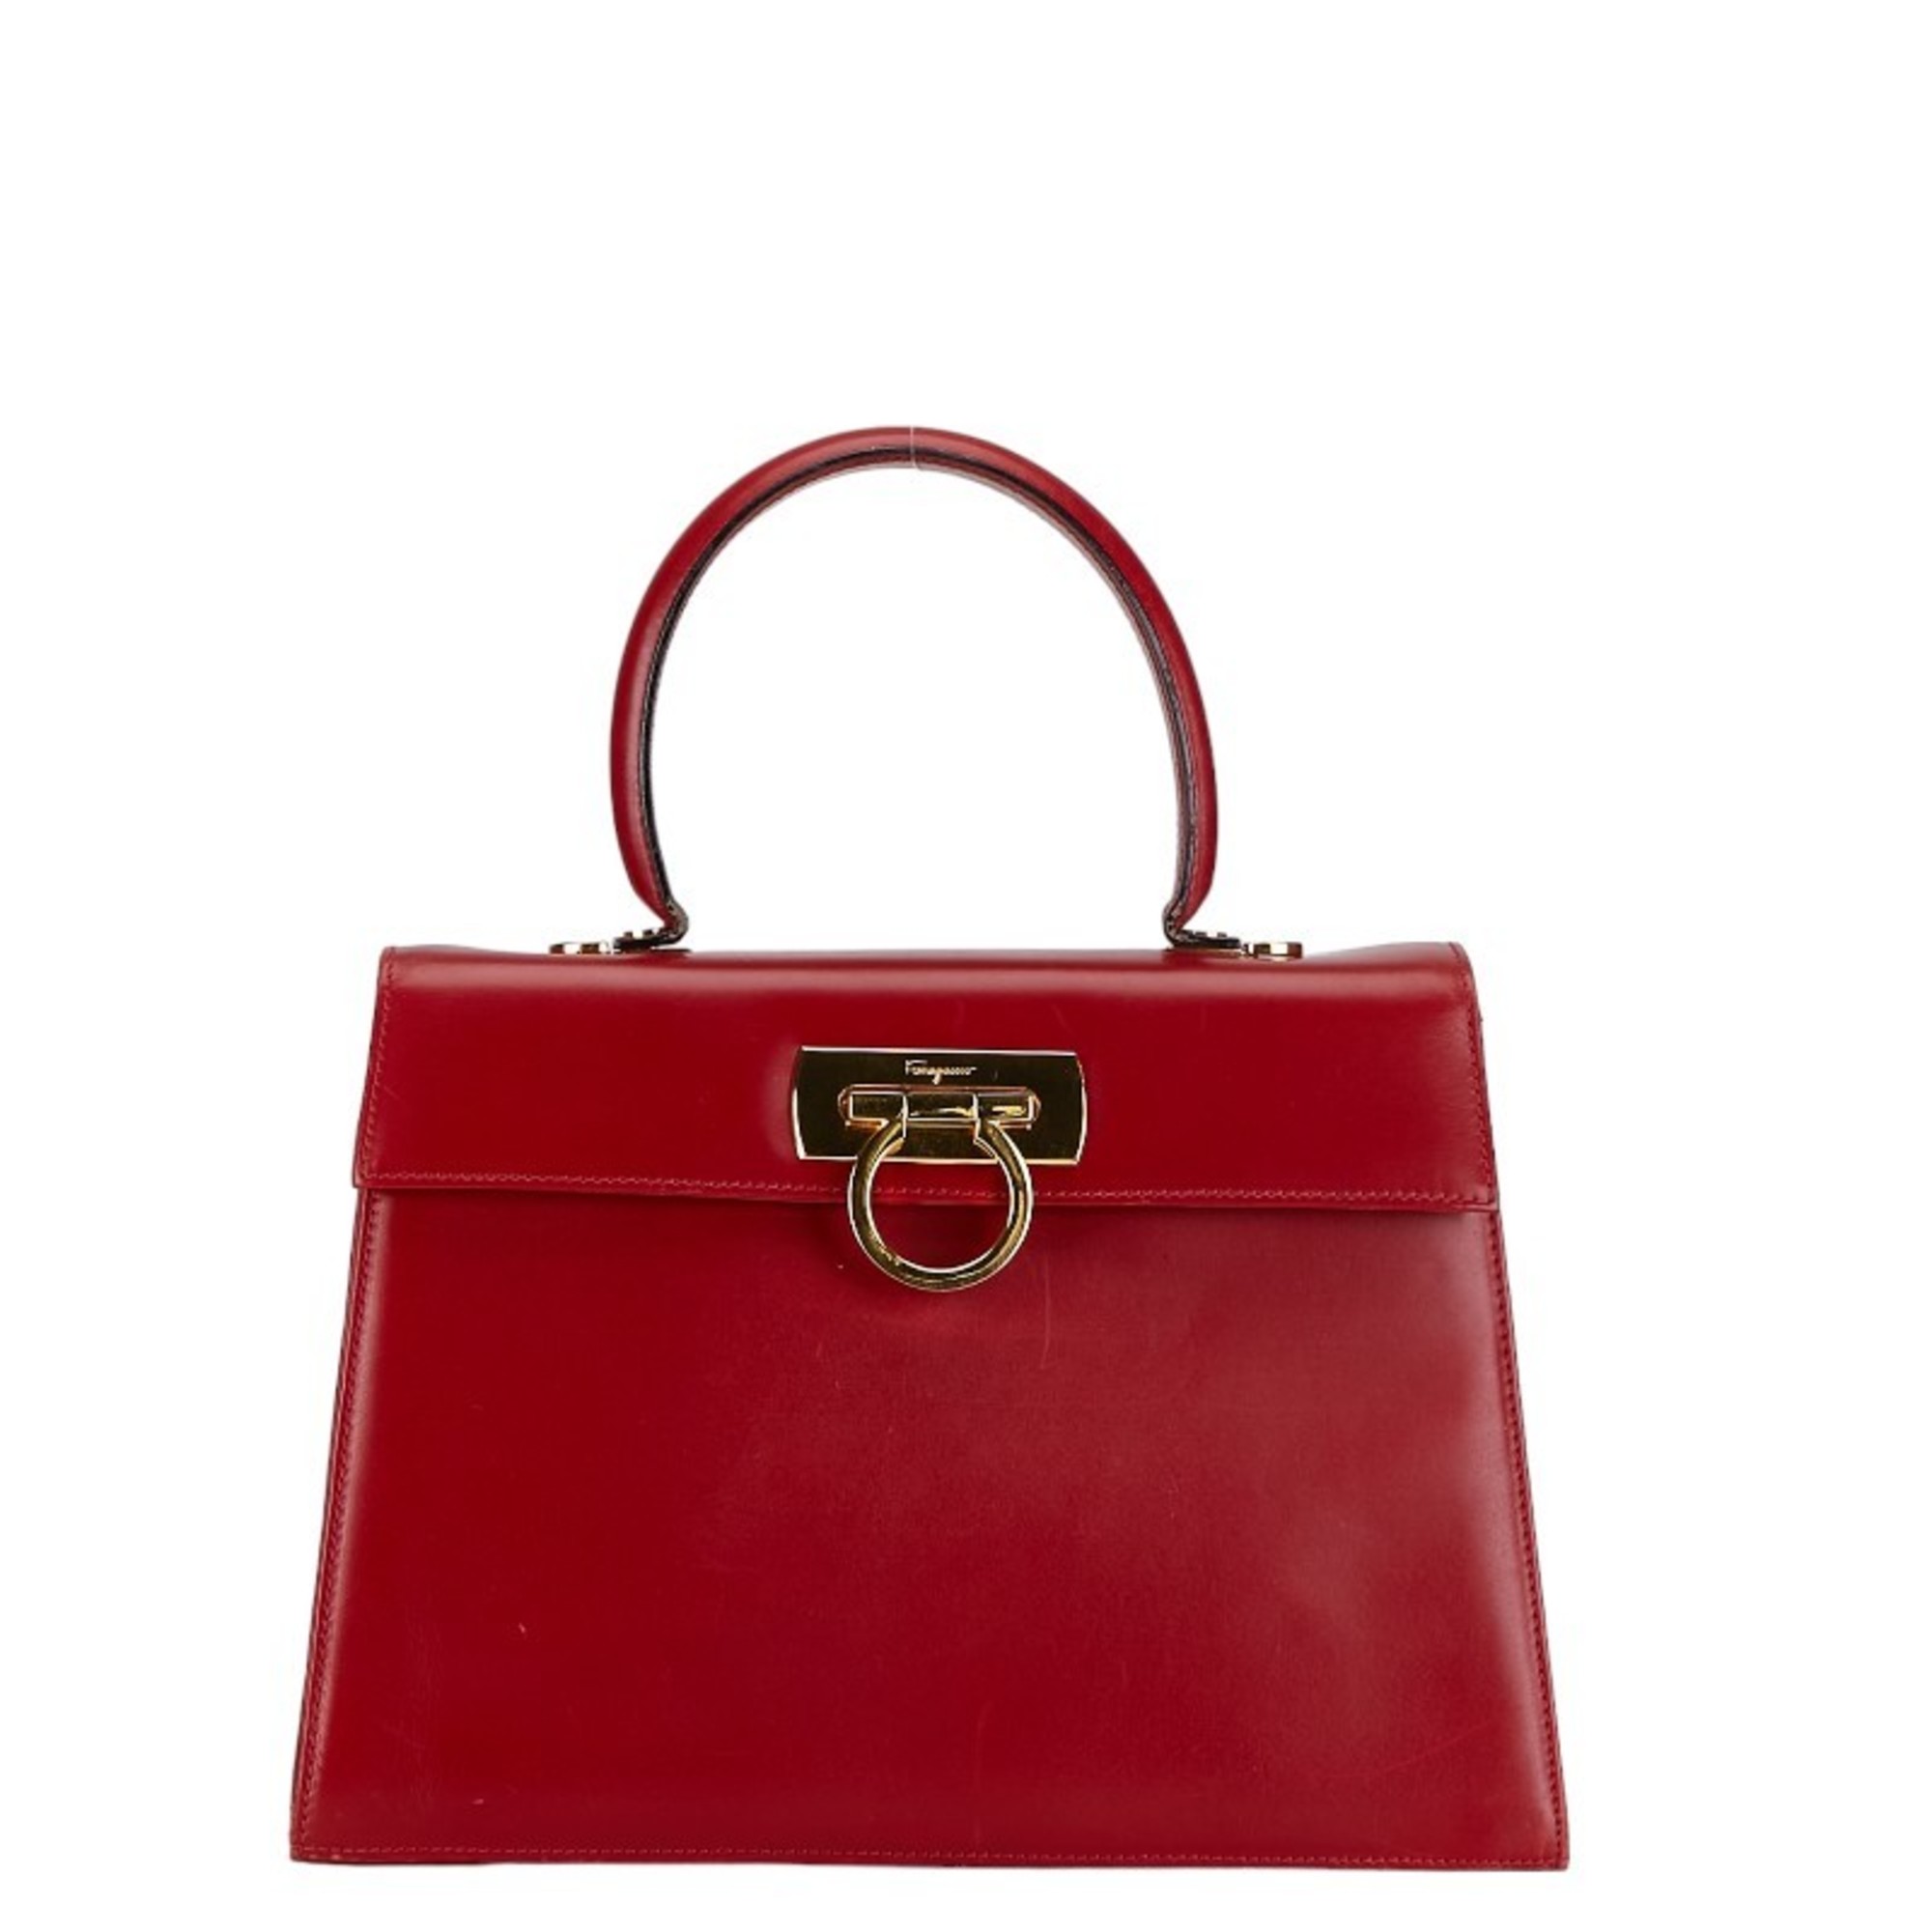 Salvatore Ferragamo Gancini Handbag Shoulder Bag Red Leather Women's